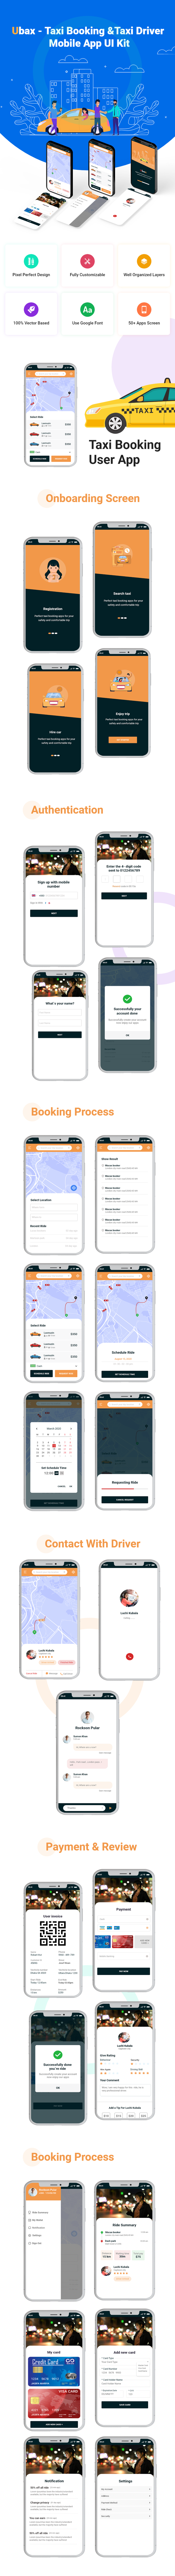 Ubax- Taxi Booking & Taxi Driver Mobile App UI Kit - 2